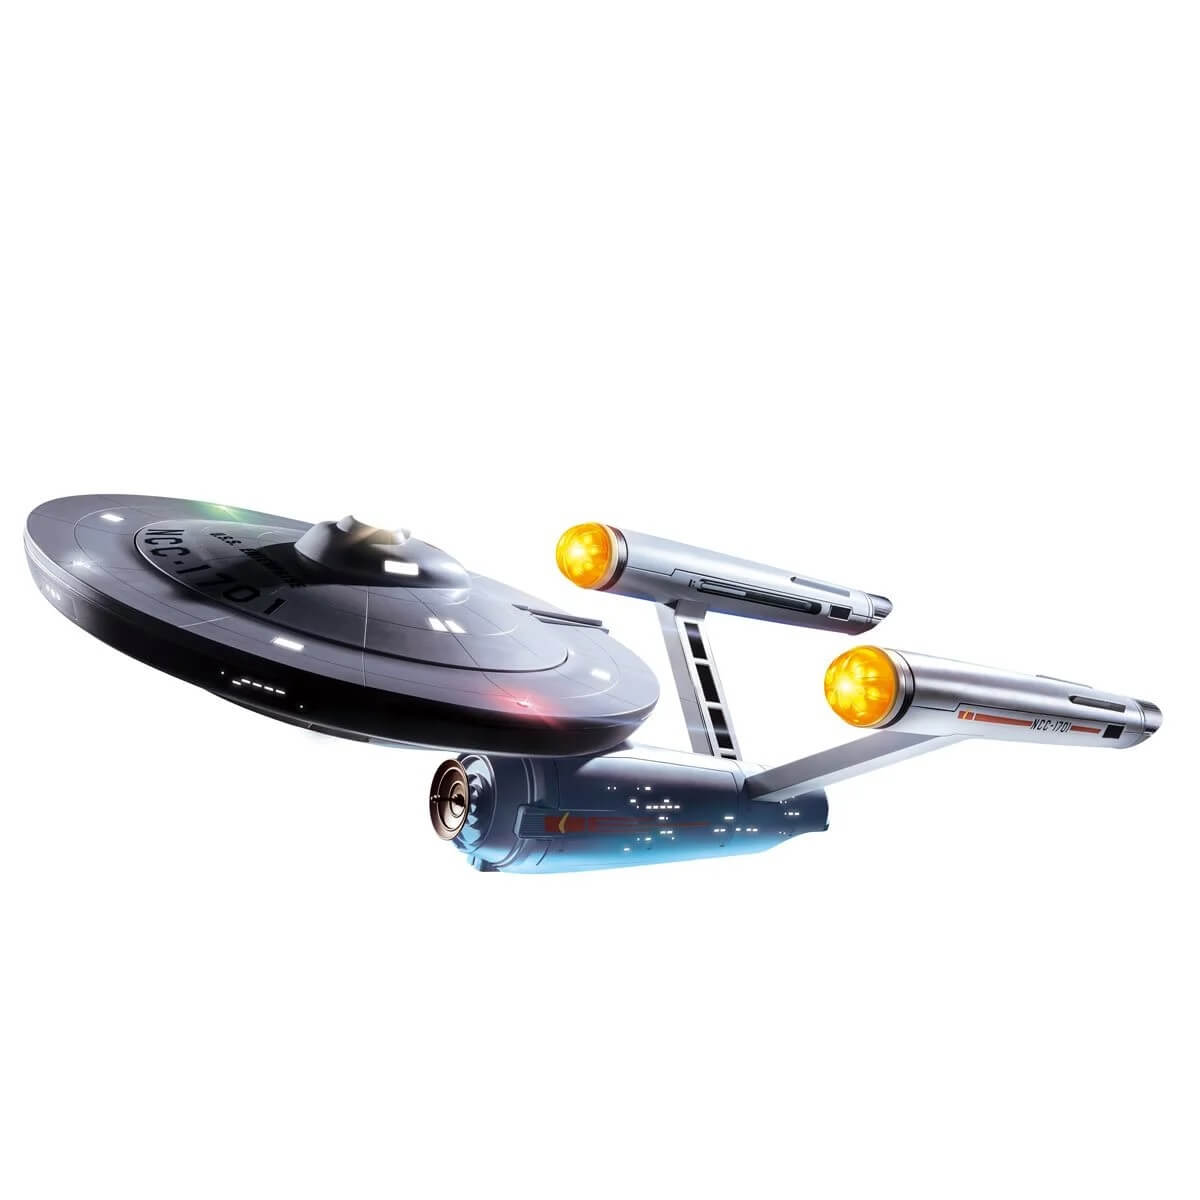 Playmobil Star Trek U.S.S. Enterprise NCC-1701 Limited Edition